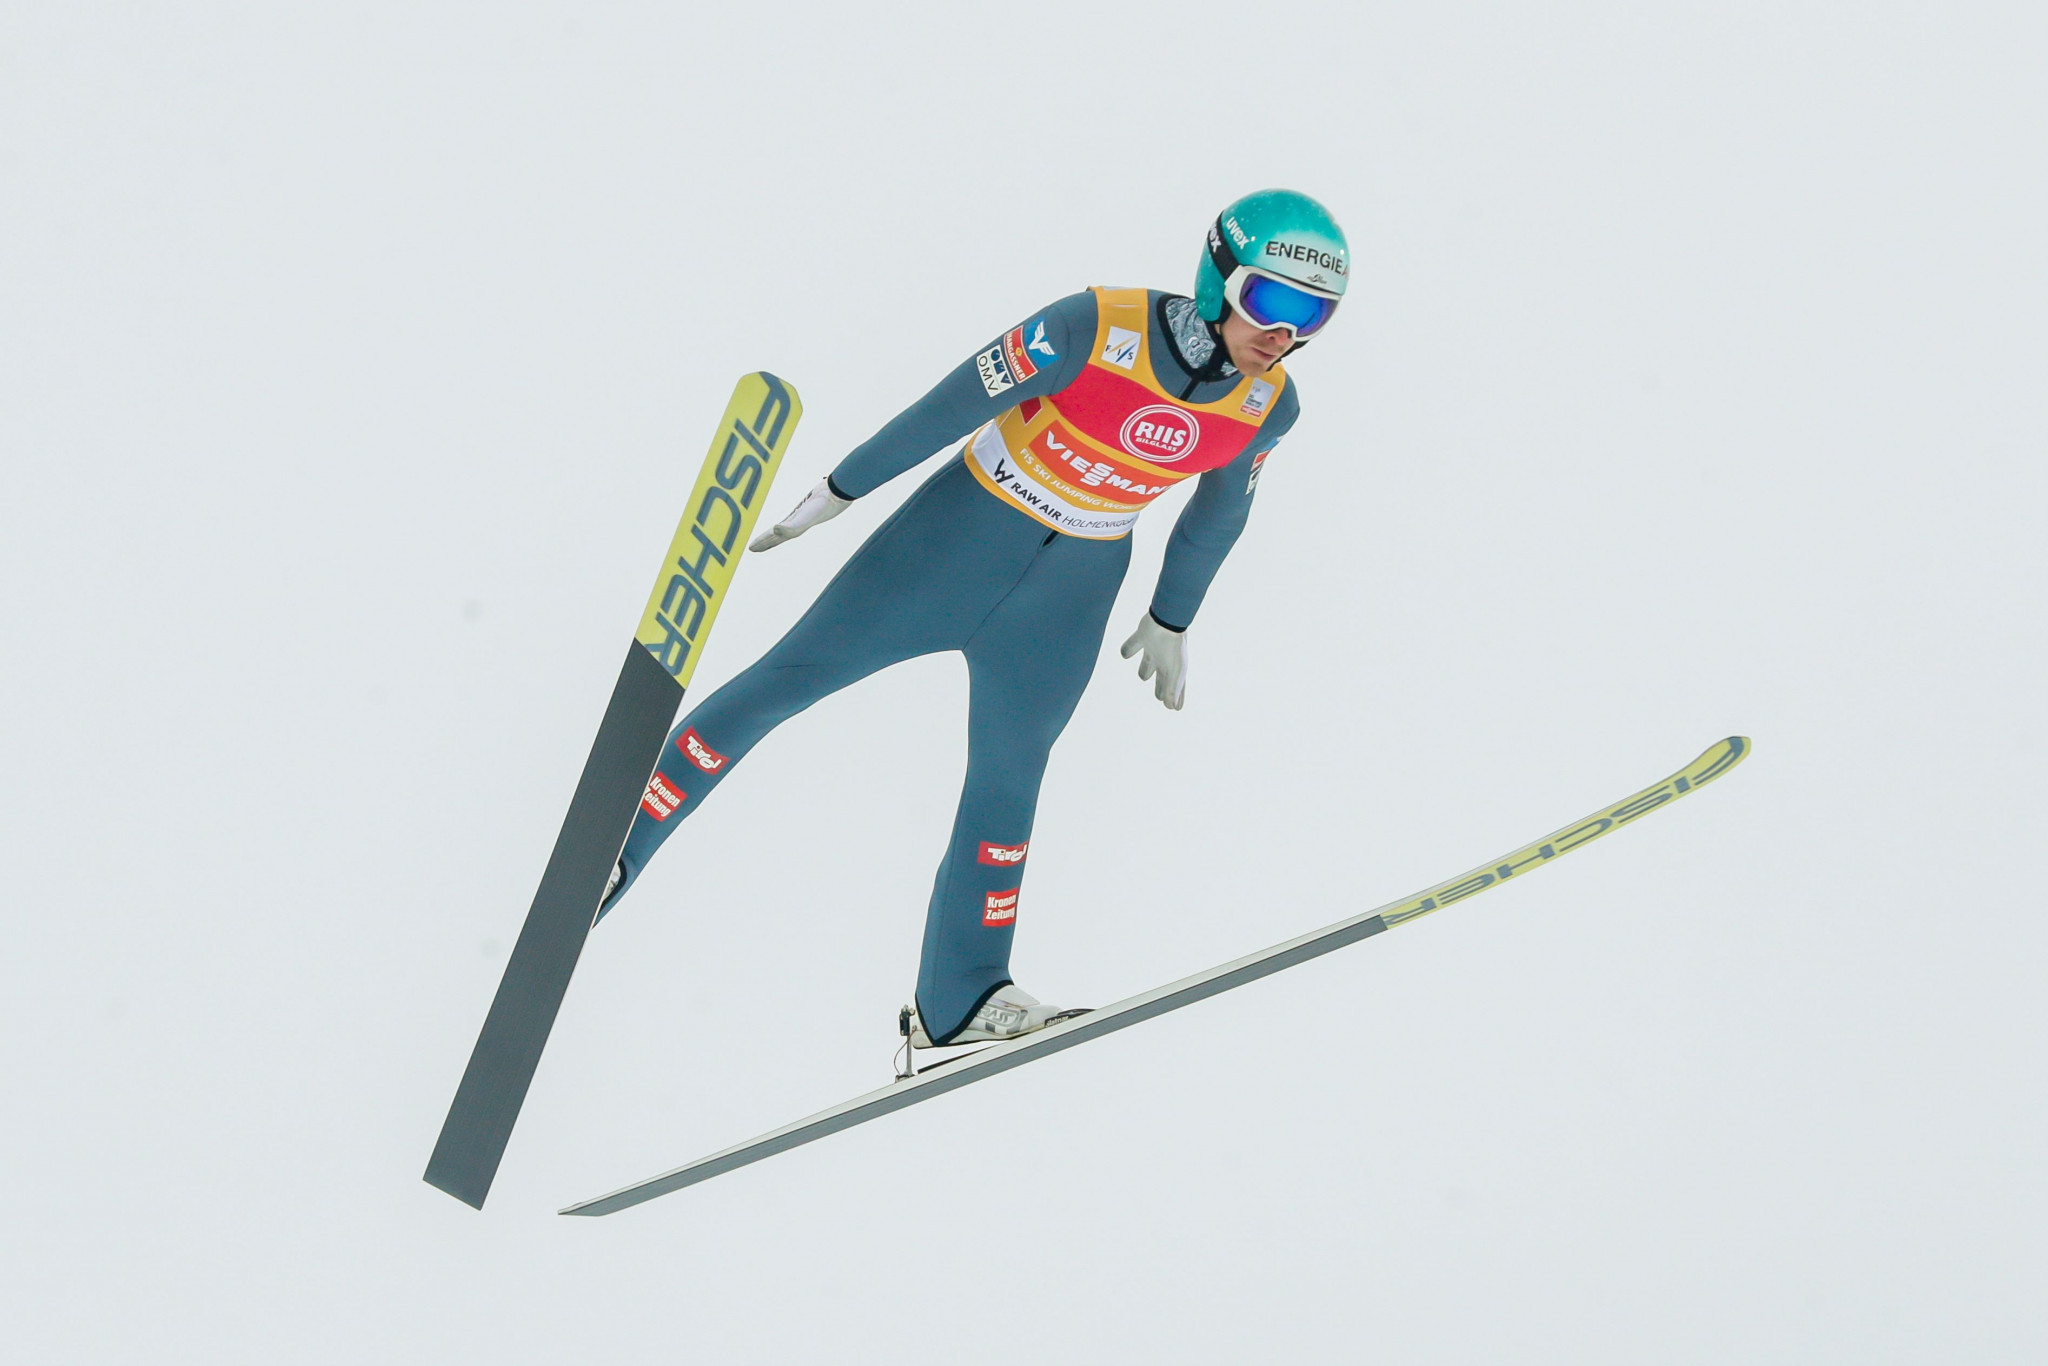 Austria win team event at FIS Ski Jumping World Cup in Wisla